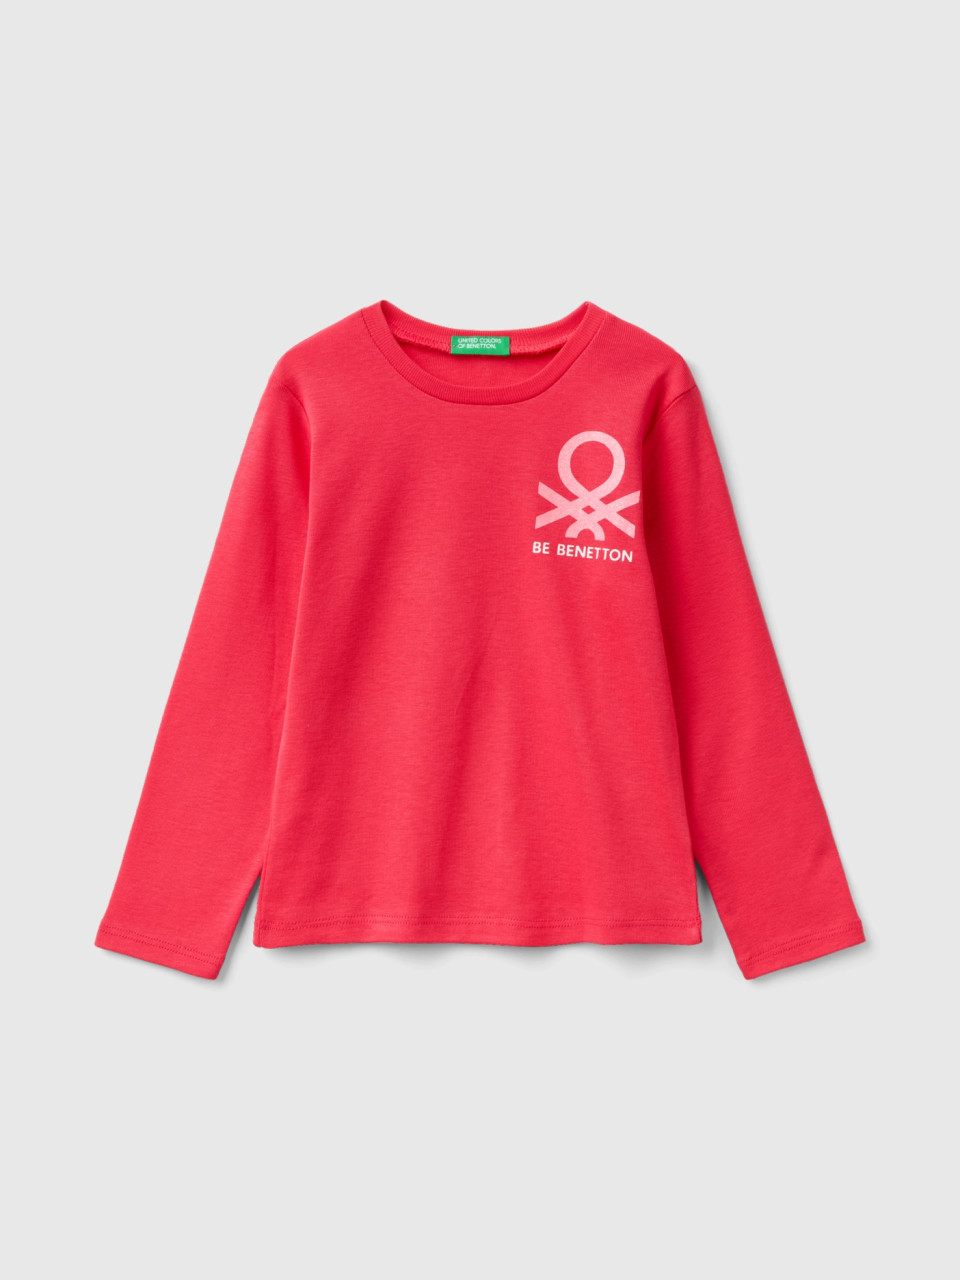 Benetton, Long Sleeve T-shirt With Glittery Print, Fuchsia, Kids